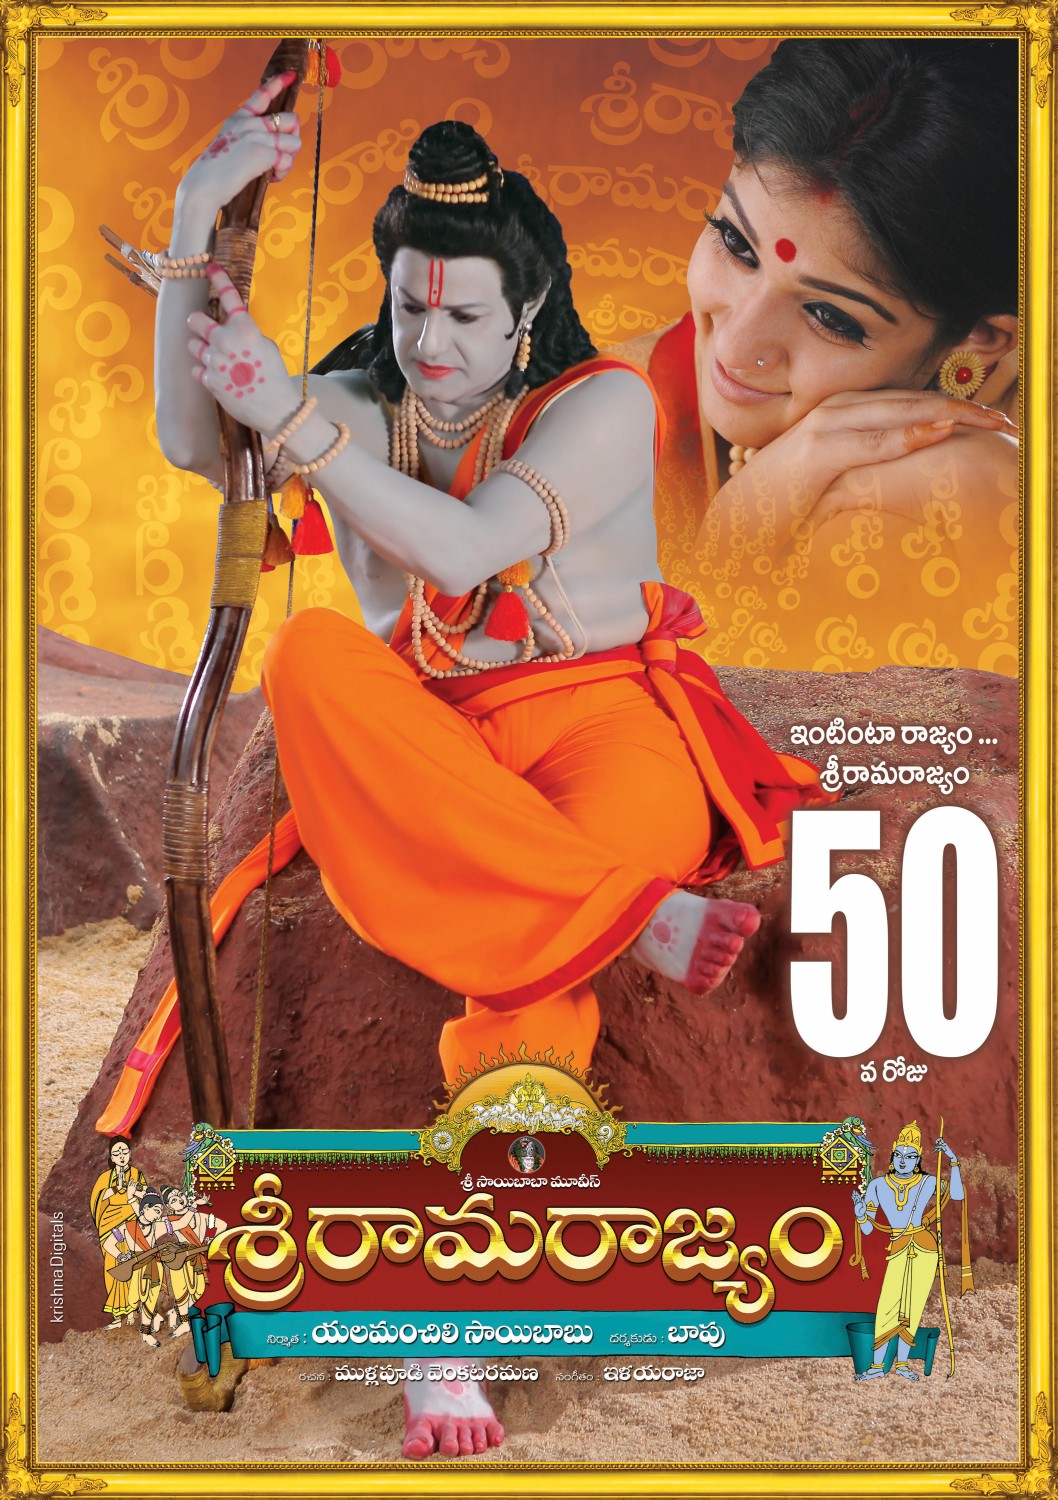 Extra Large Movie Poster Image for Sri Rama Rajyam (#10 of 10)